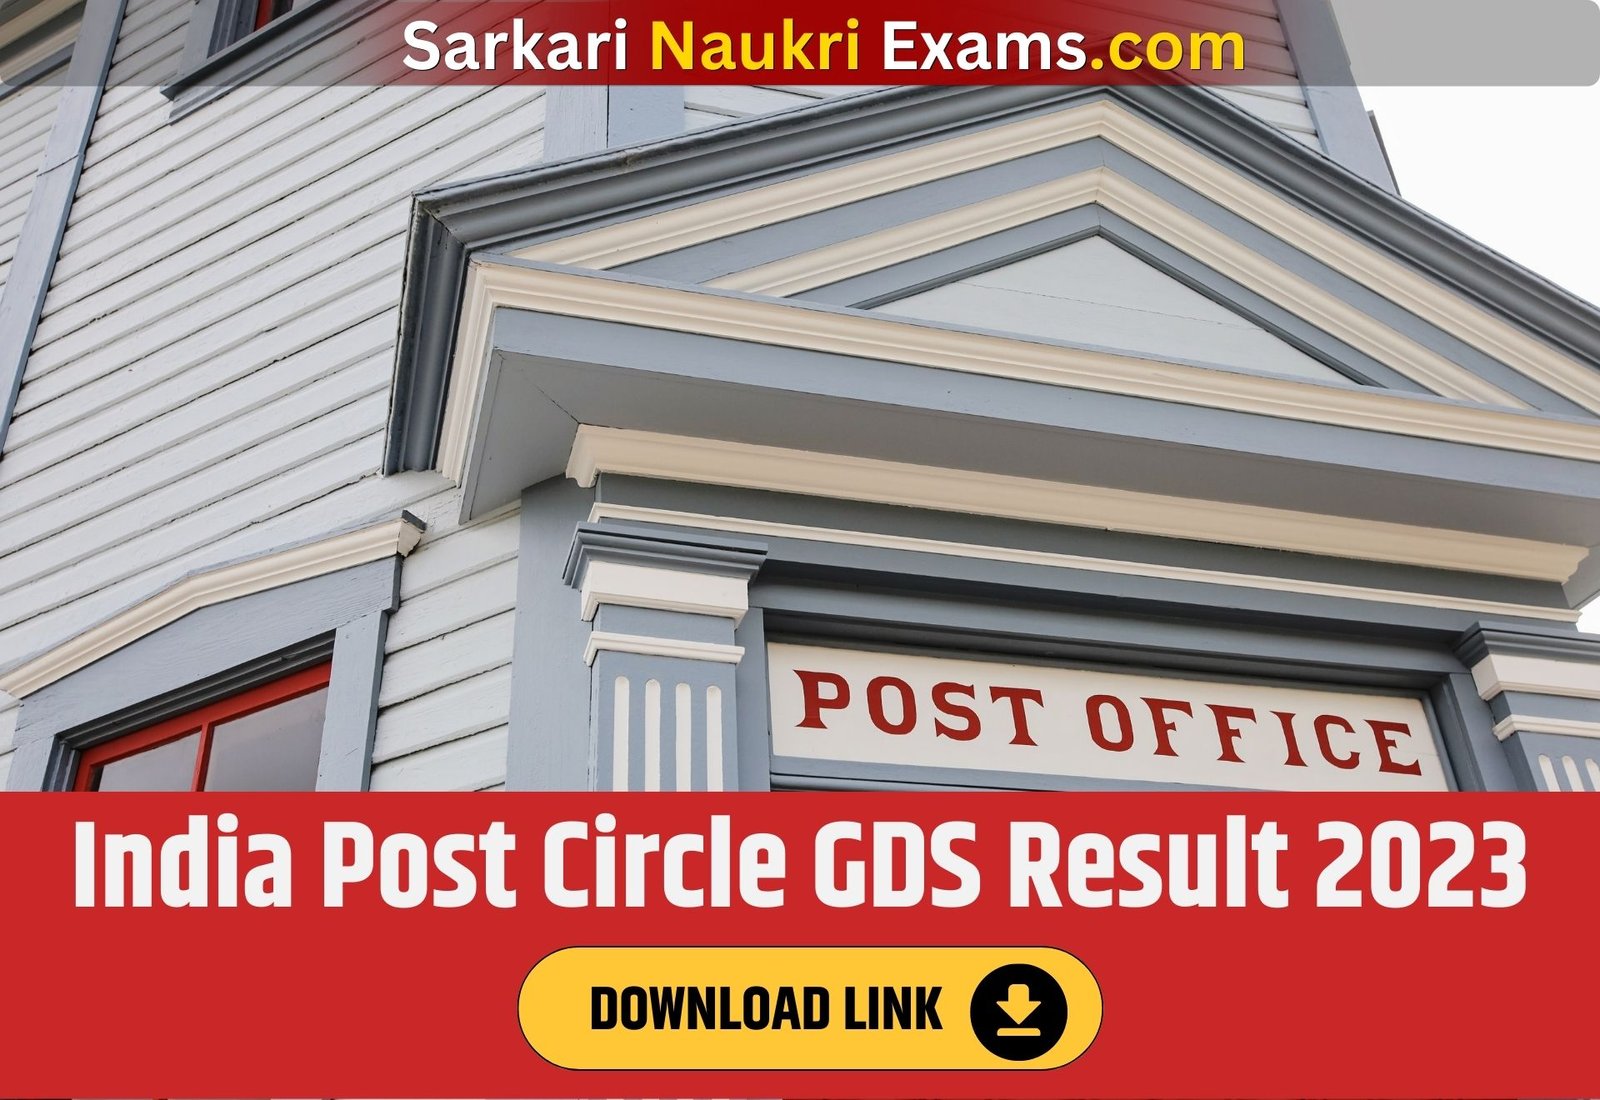 India Post Circle GDS Result 2023 | Merit List, Download Link